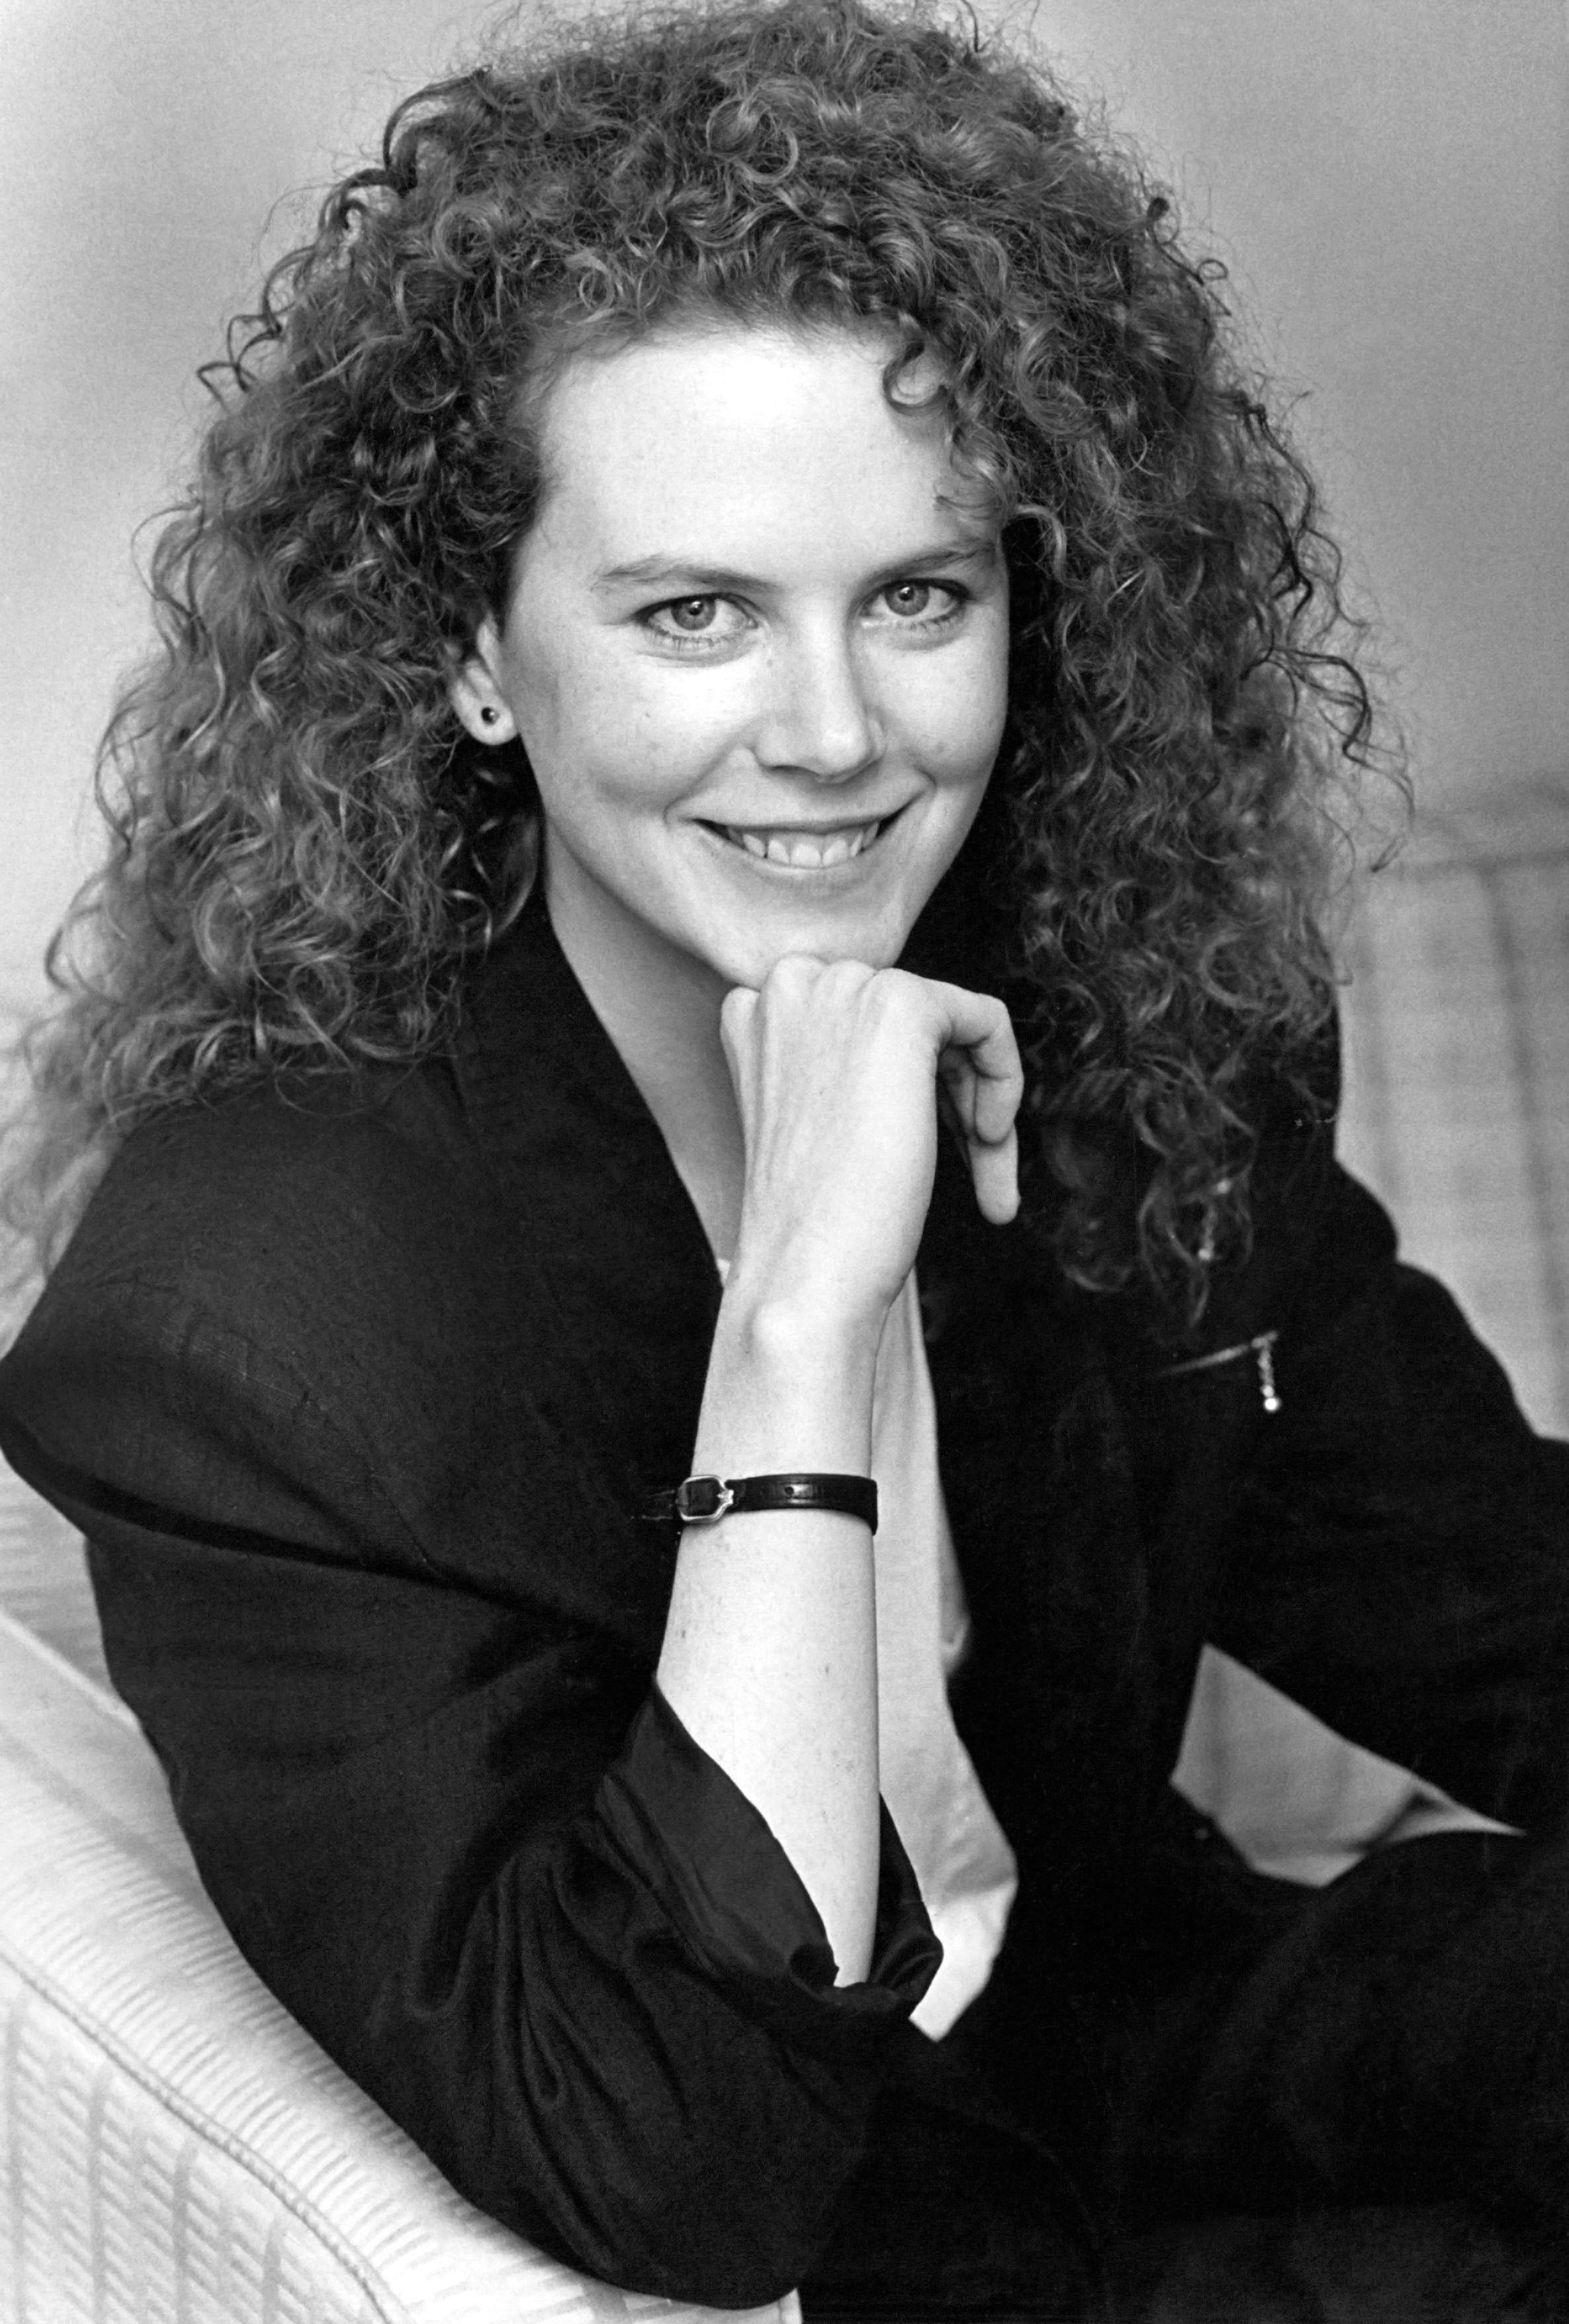 <p><a href="https://www.msn.com/en-us/news/other/9-rare-photos-of-nicole-kidmans-early-career/ss-AA1de21D?disableErrorRedirect=true&infiniteContentCount=0">9 Rare Photos of Nicole Kidman's Early Career</a></p>